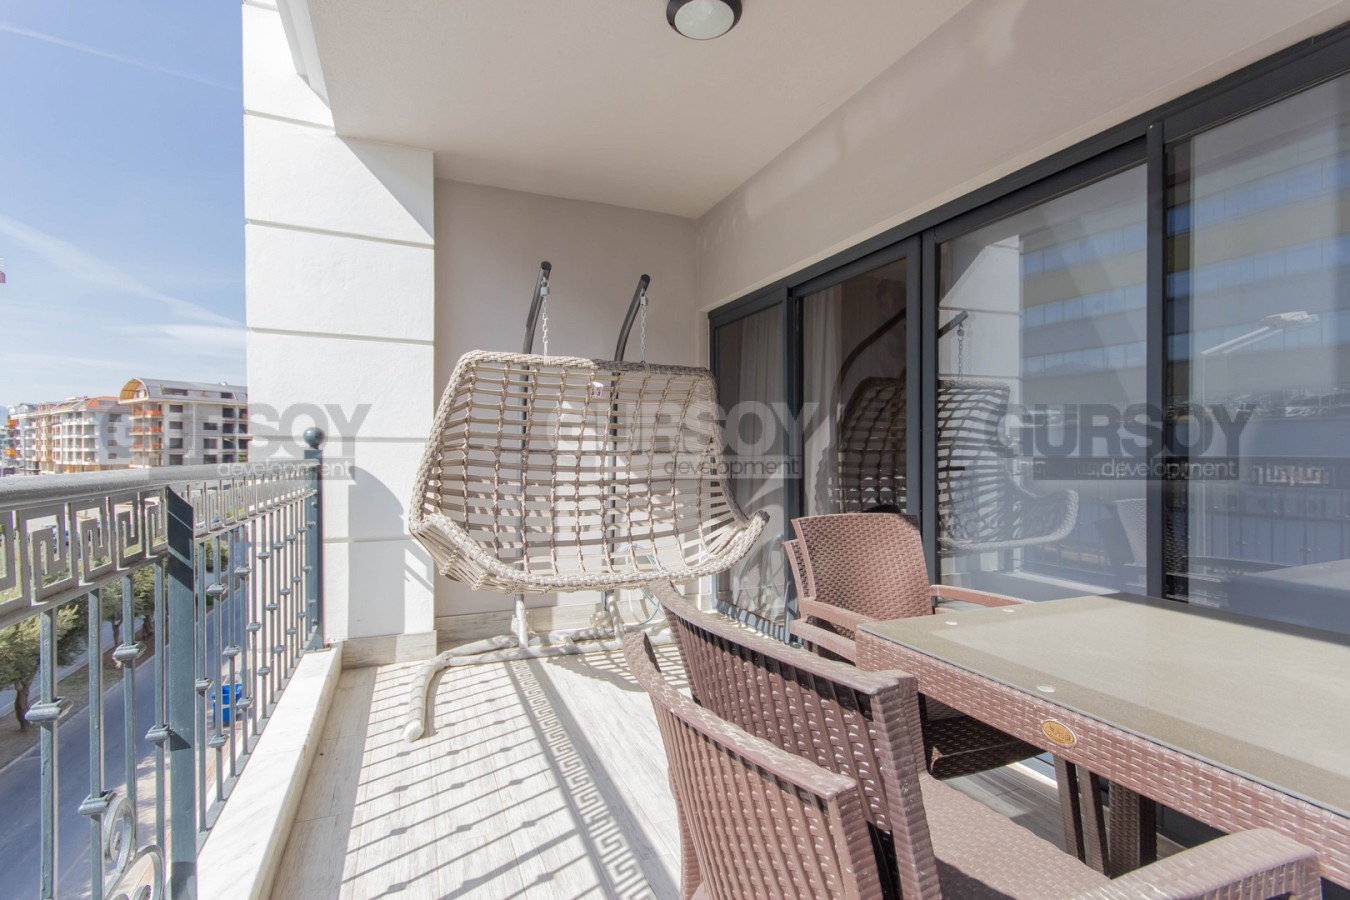 Шикарная стильная квартира 2+1 с видом на море в 100 м от пляжа в Каргыджаке, 100 м2 в Турции - фото 1